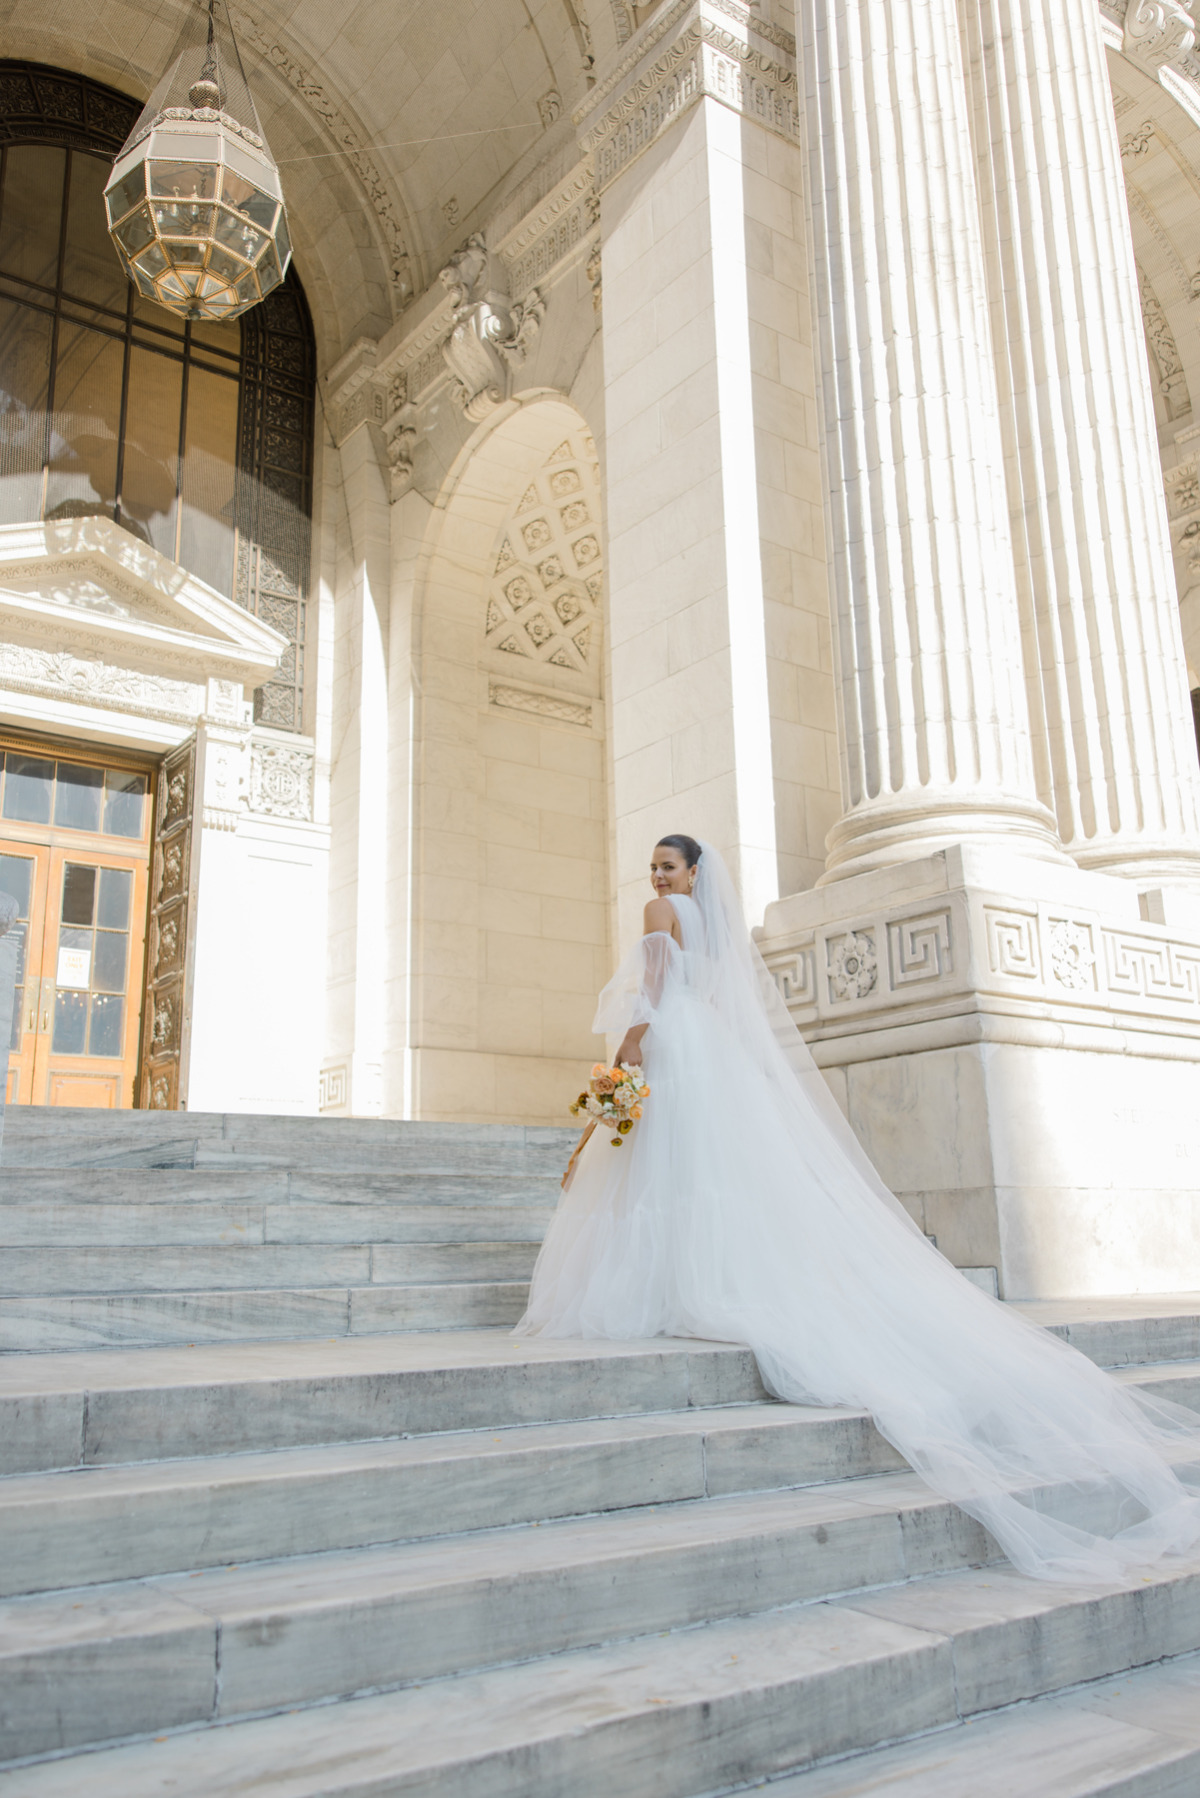 NYC City Hall wedding photos